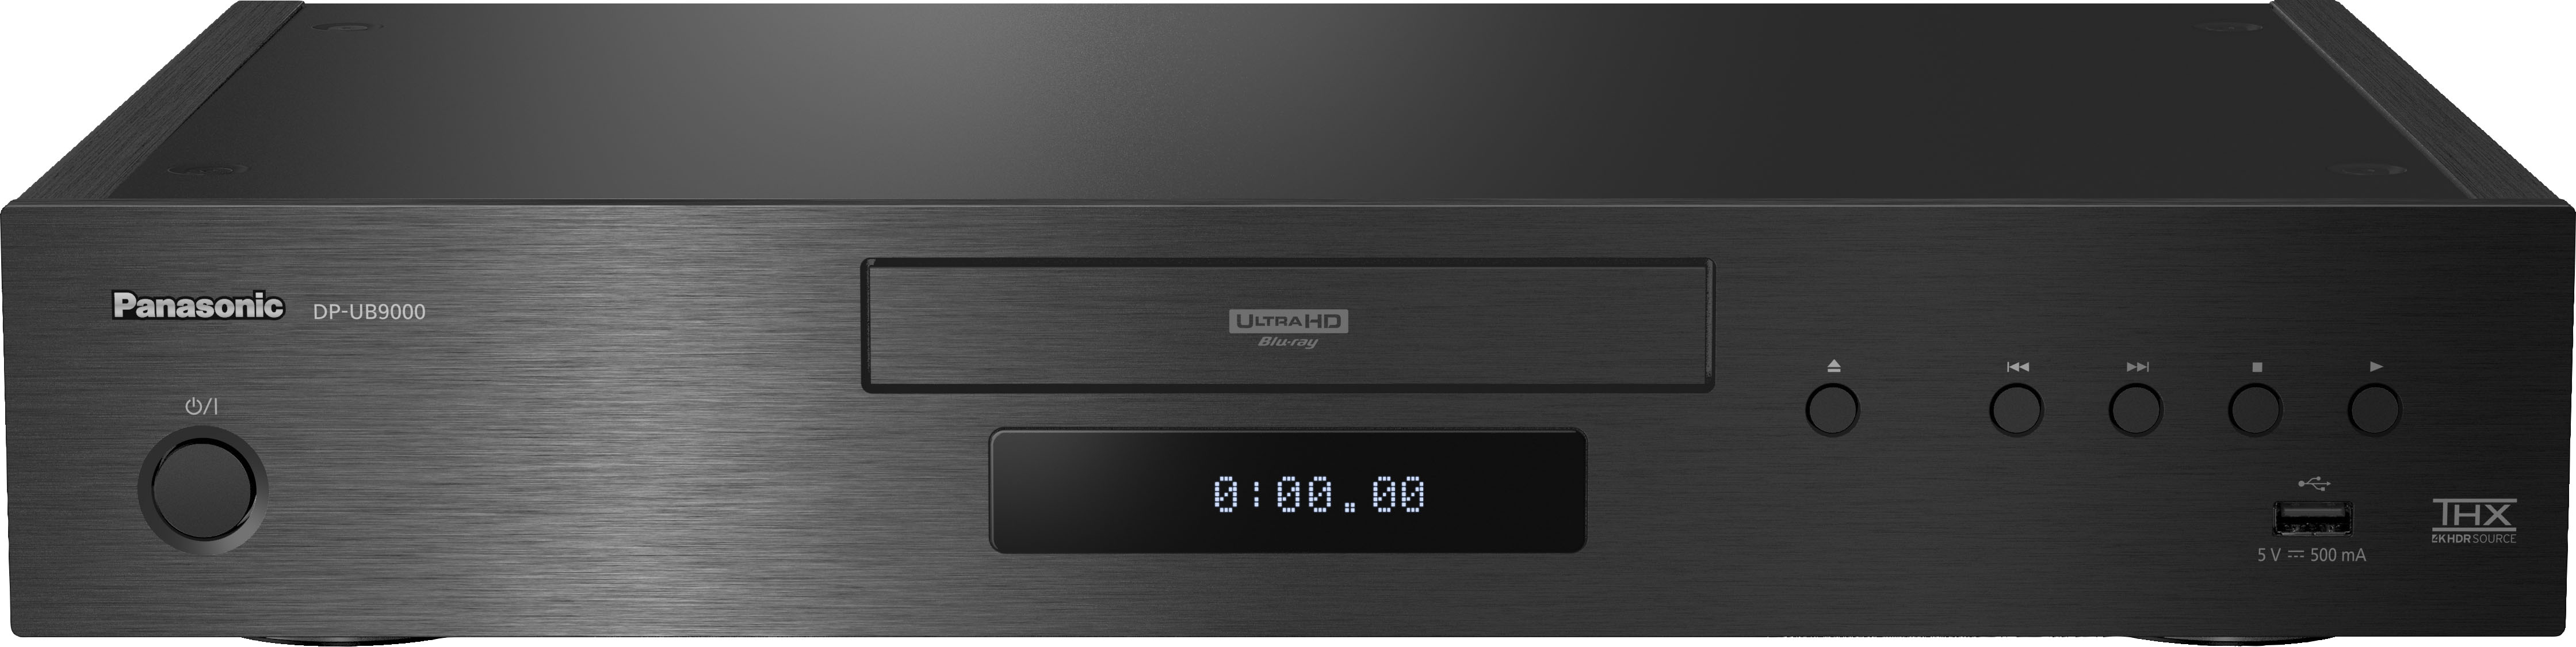 Panasonic 4K Ultra HD Streaming Blu-ray Player with HDR10+